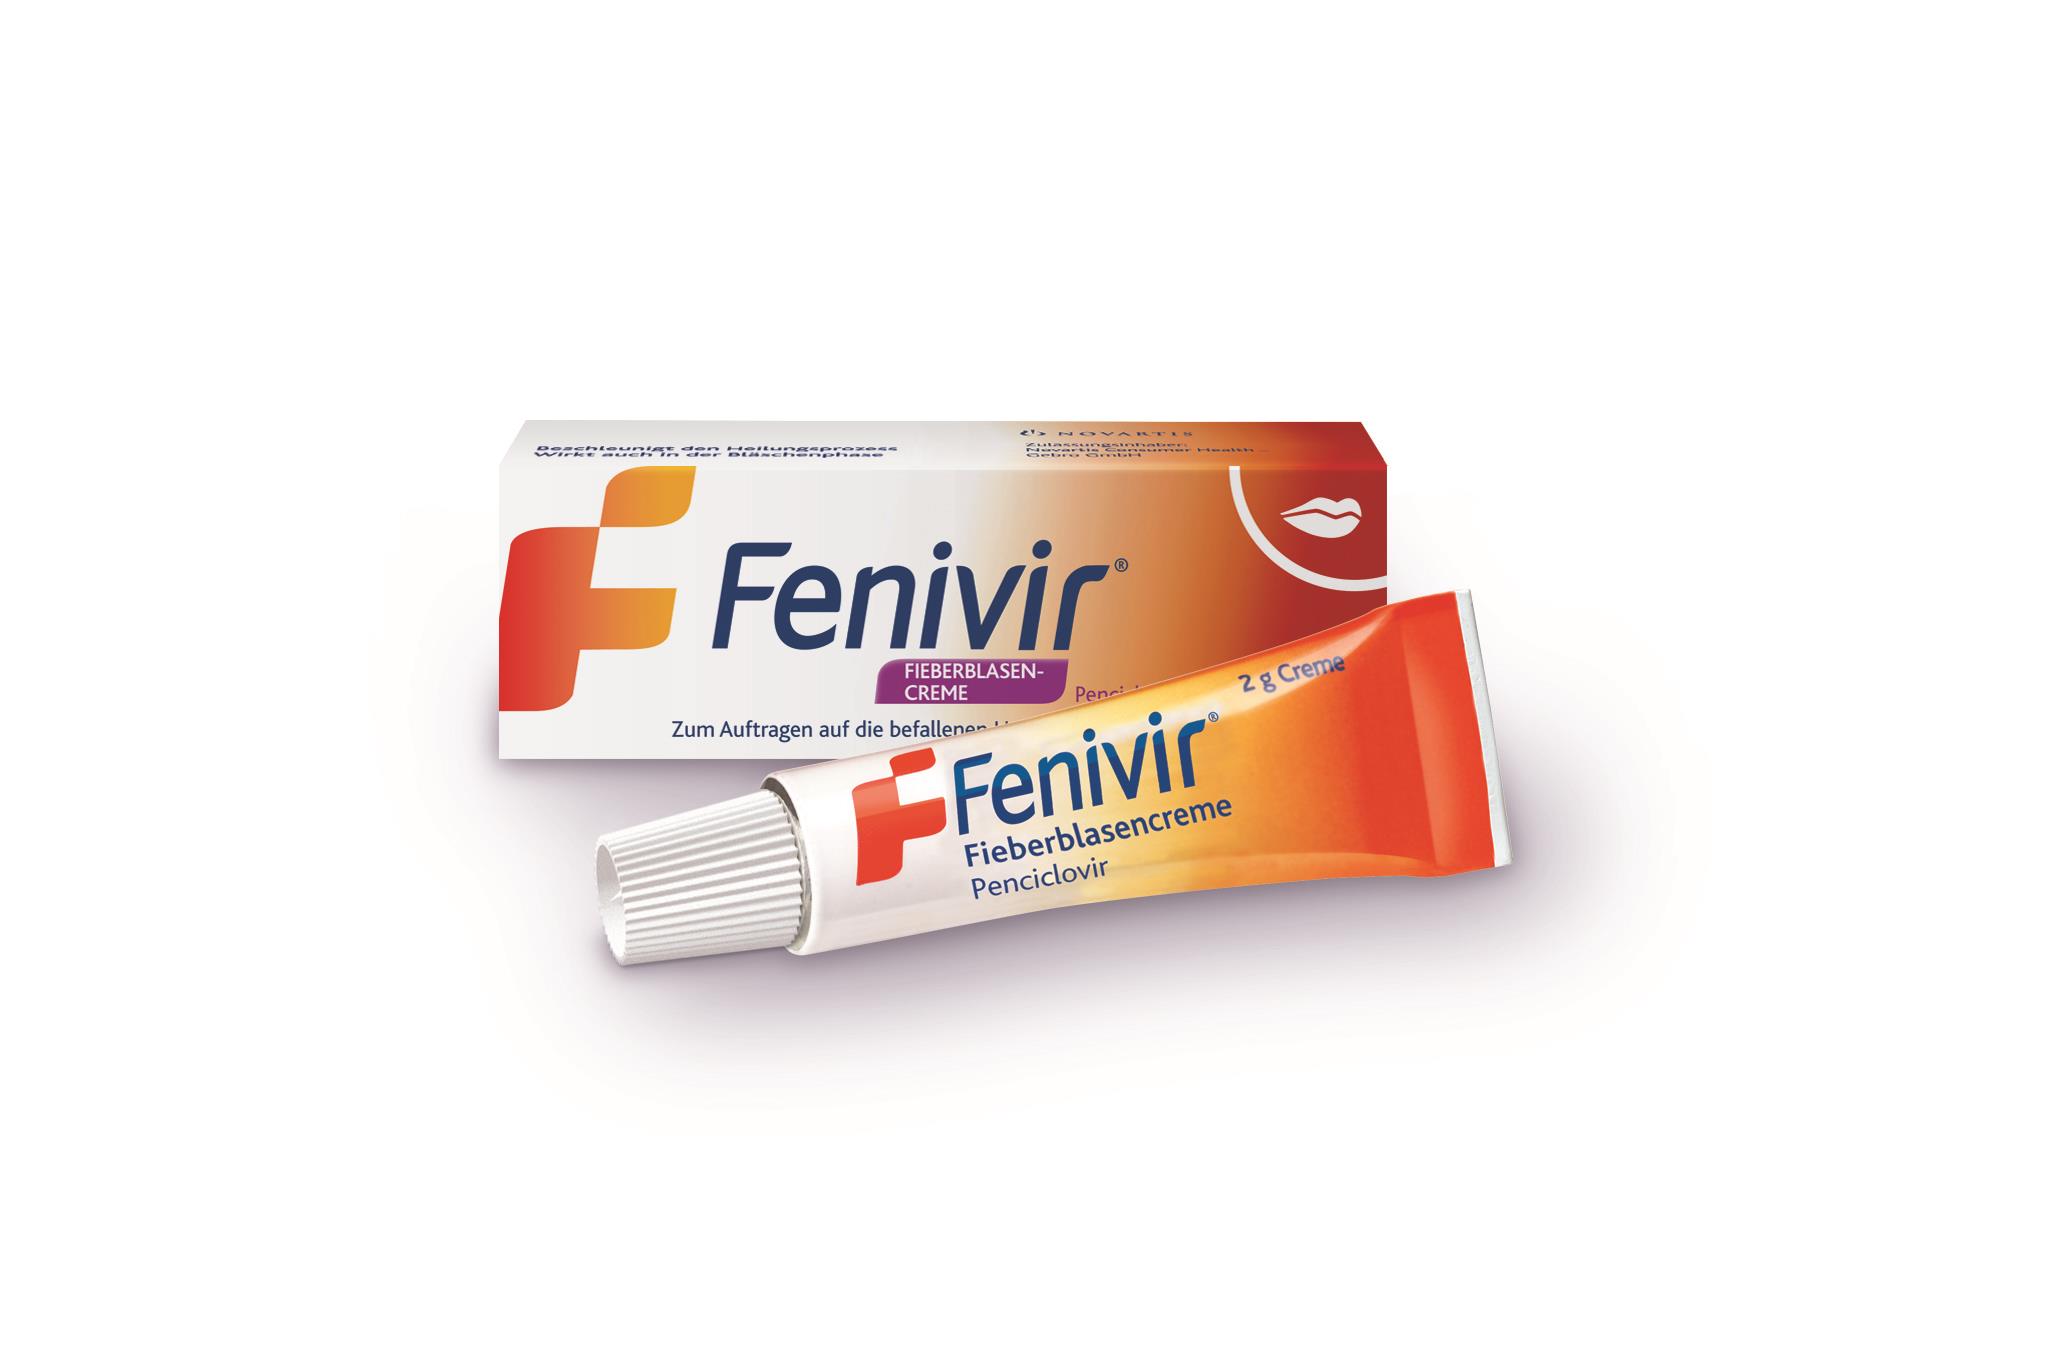 Fenivir 1% Fieberblasencreme